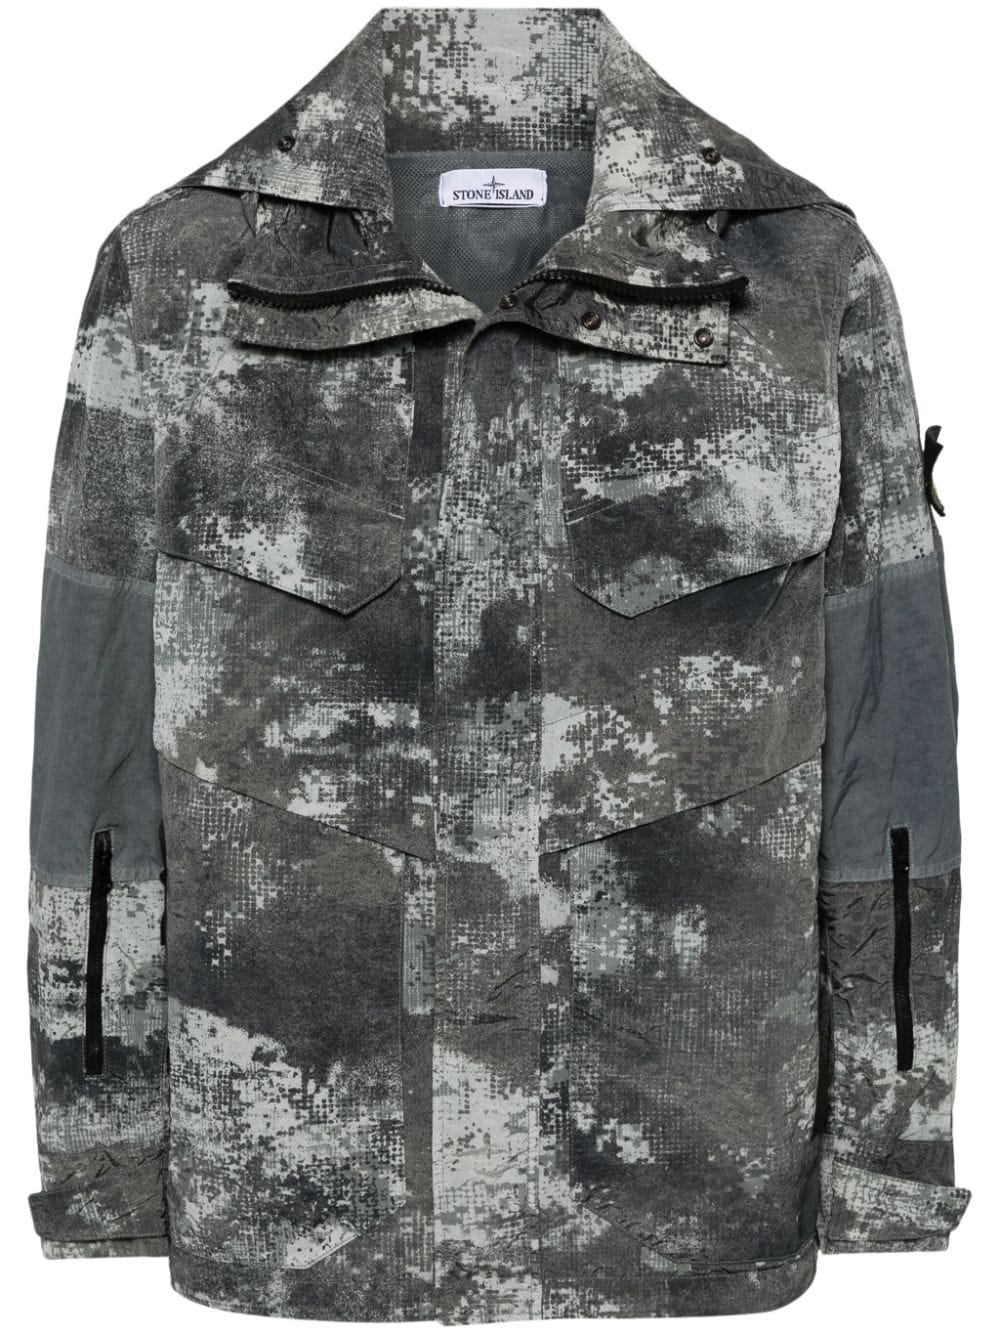 STONE ISLAND Nylon Camouflage Jacket for Men - Charcoal Grey/Light Grey Camo Pattern